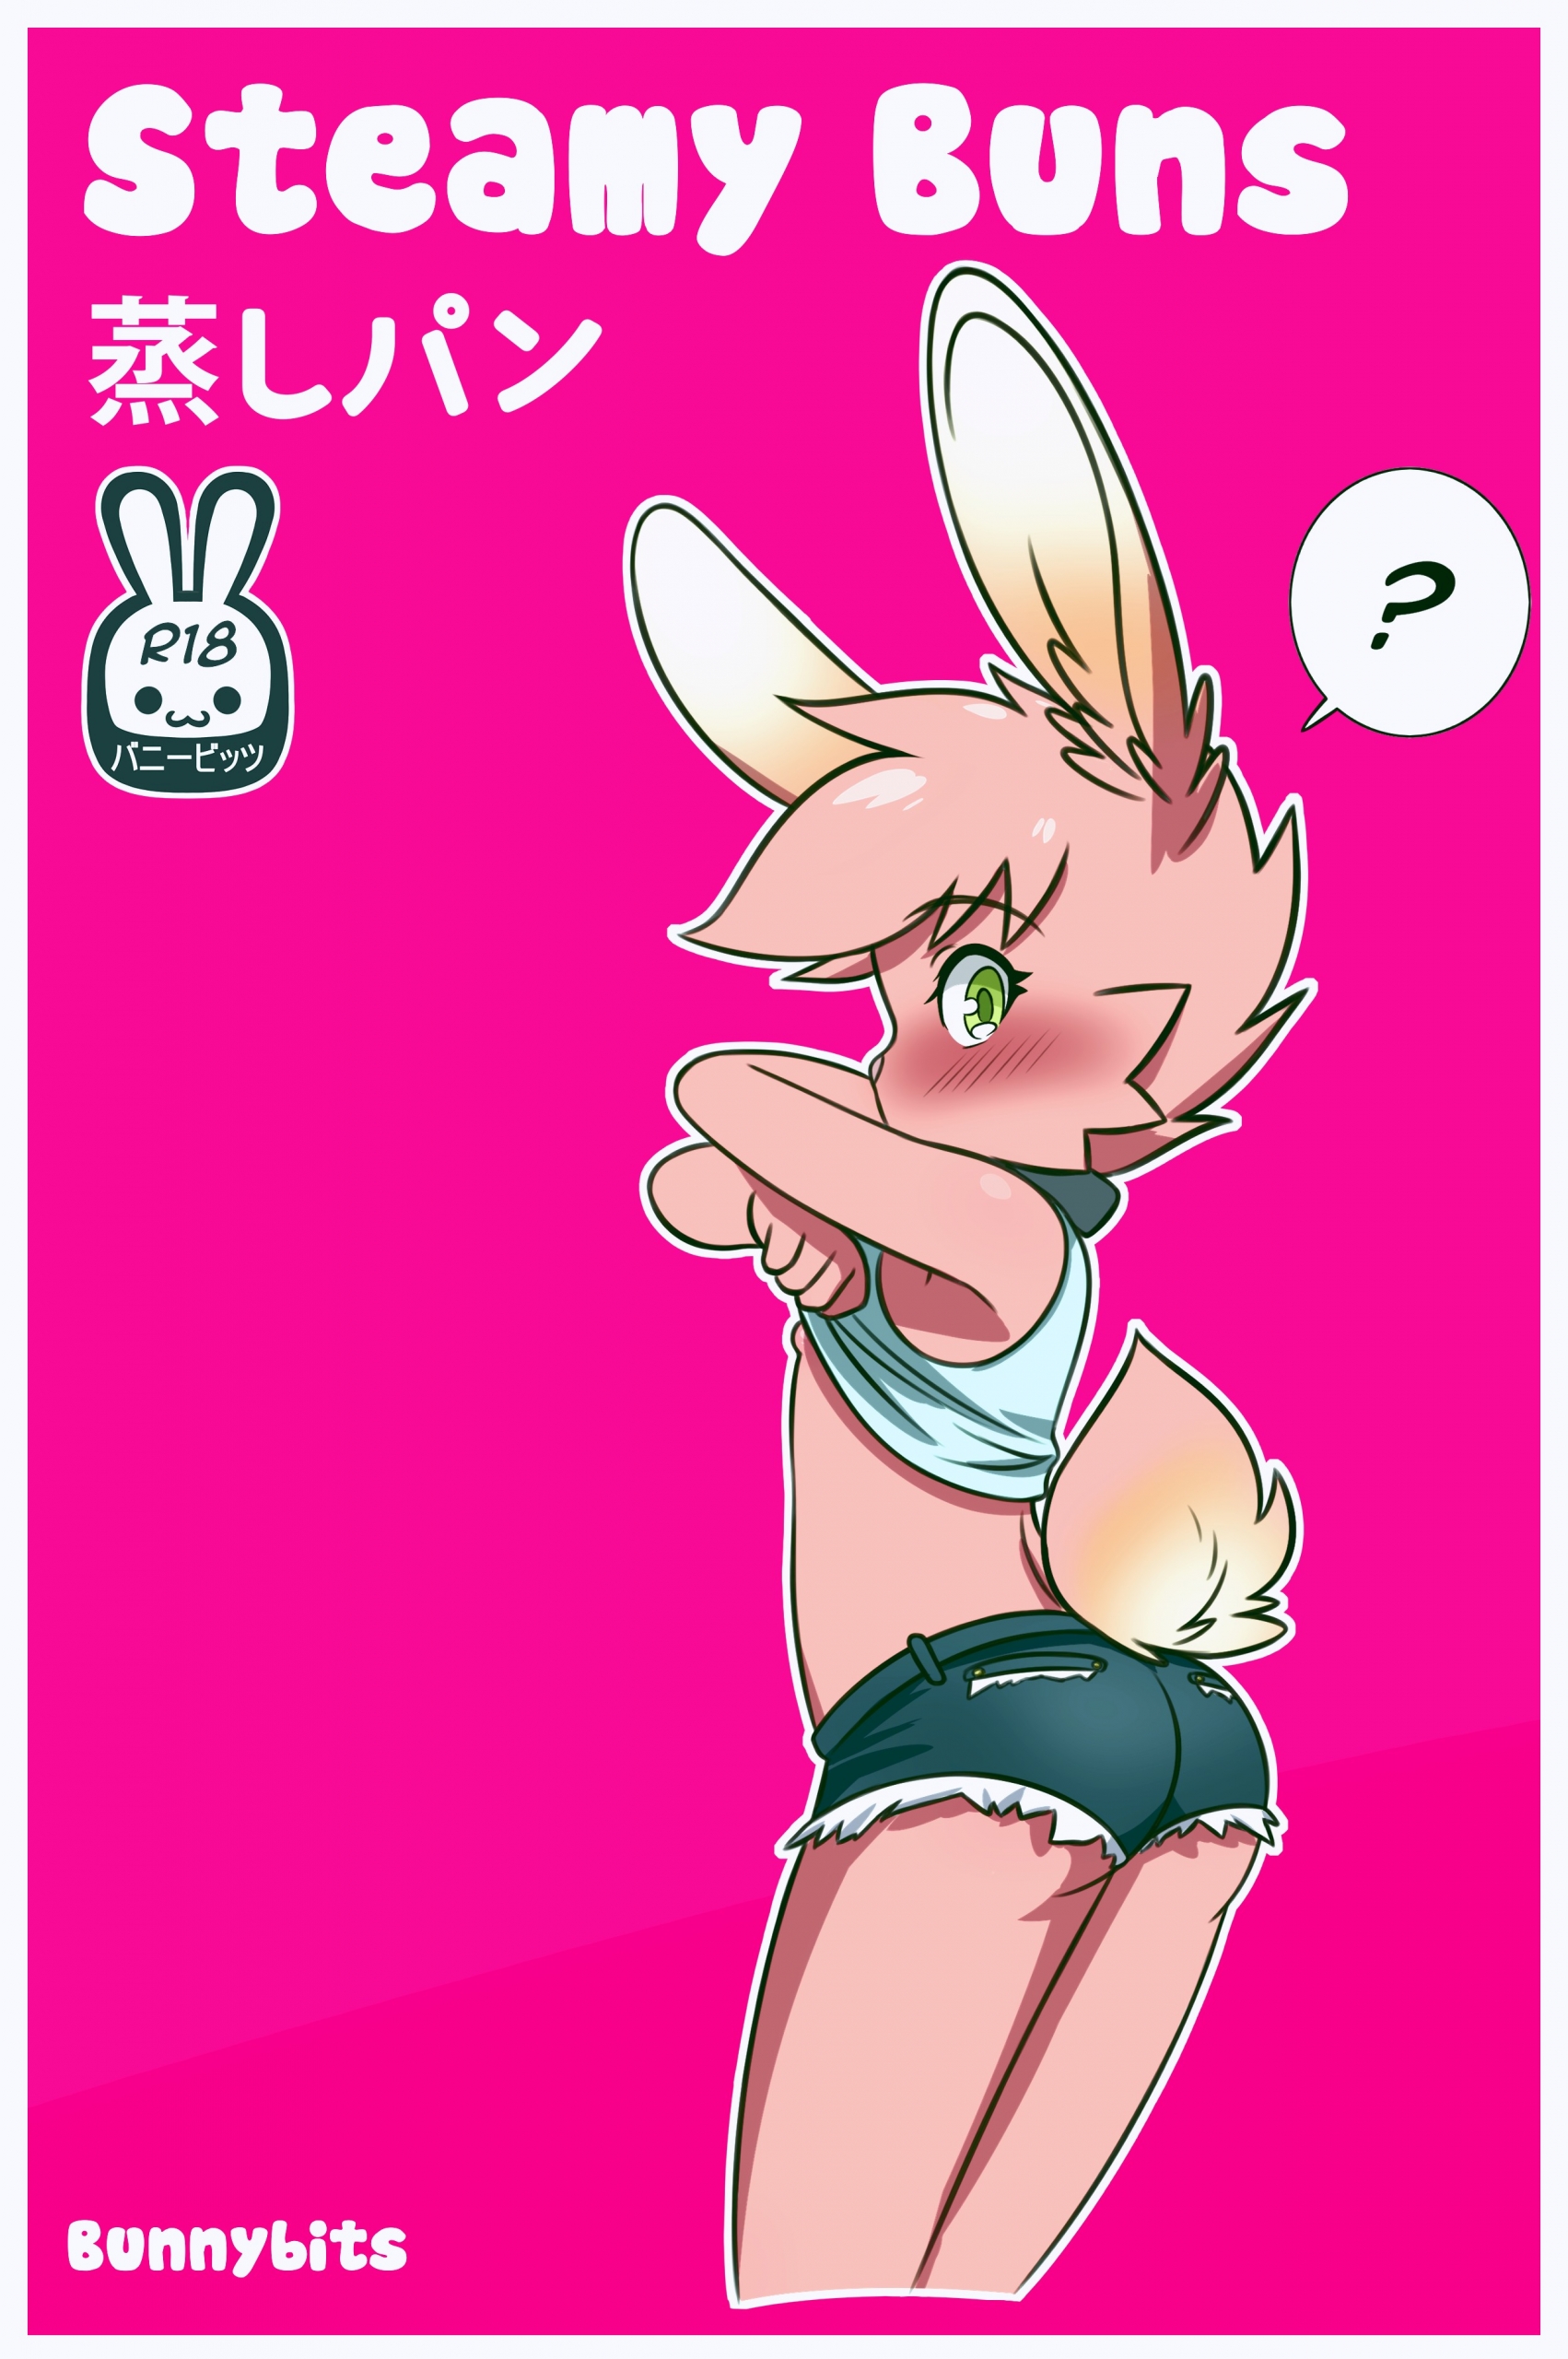 Bunny anthro porn comics